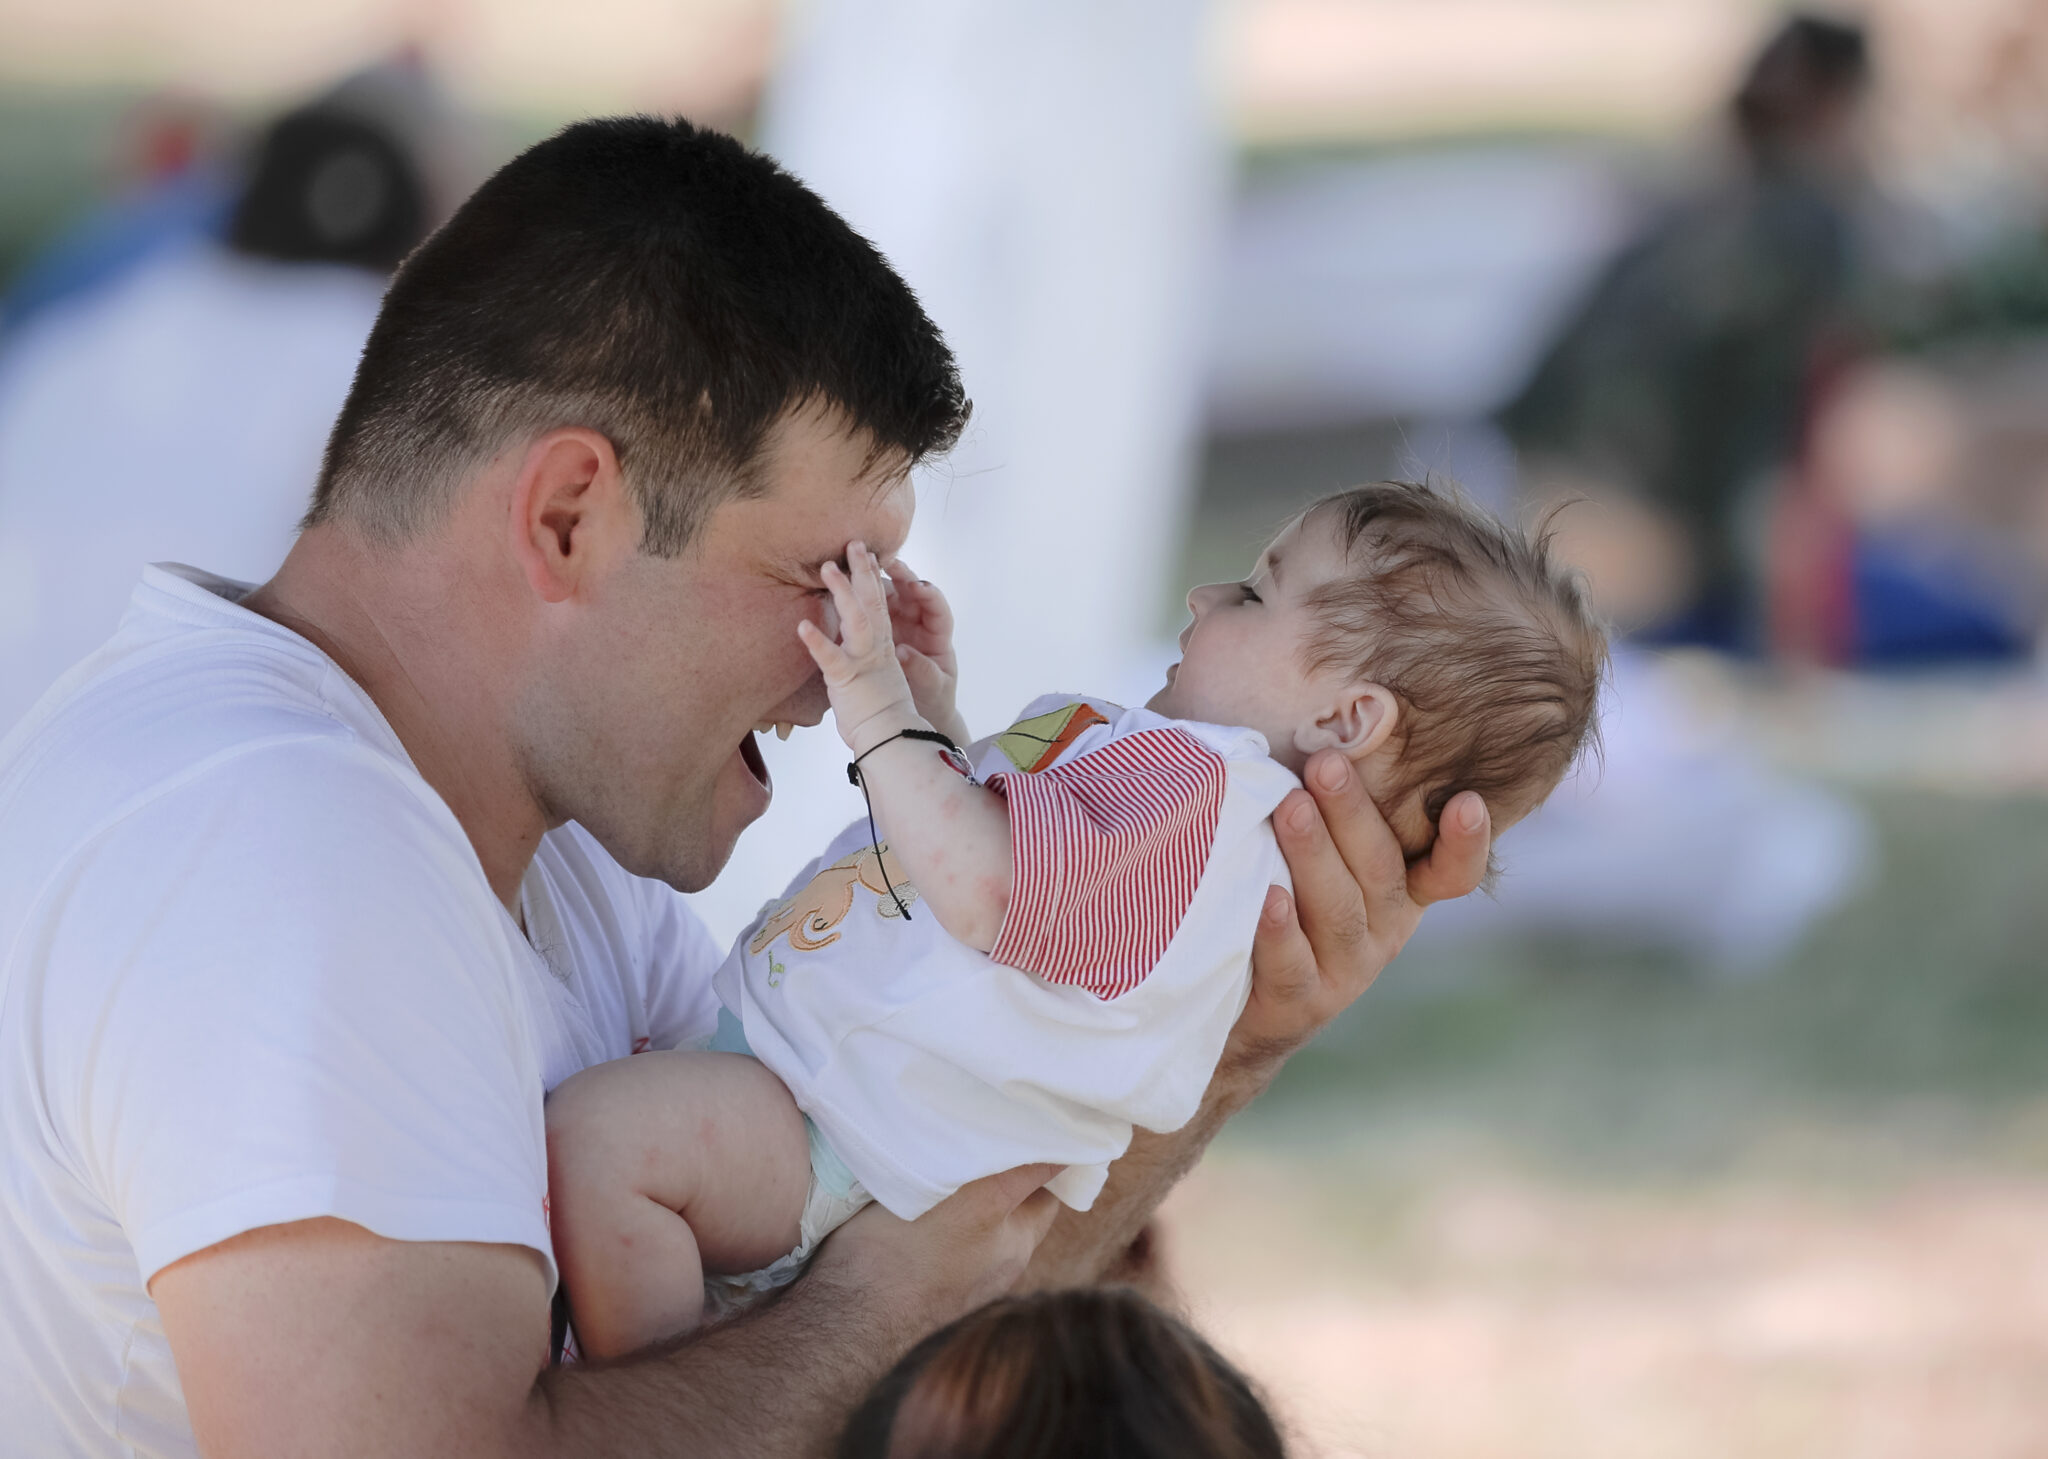 Мужчина с ребенком. Фото Vadim Ghirda / TASS / Scanpix / Leta